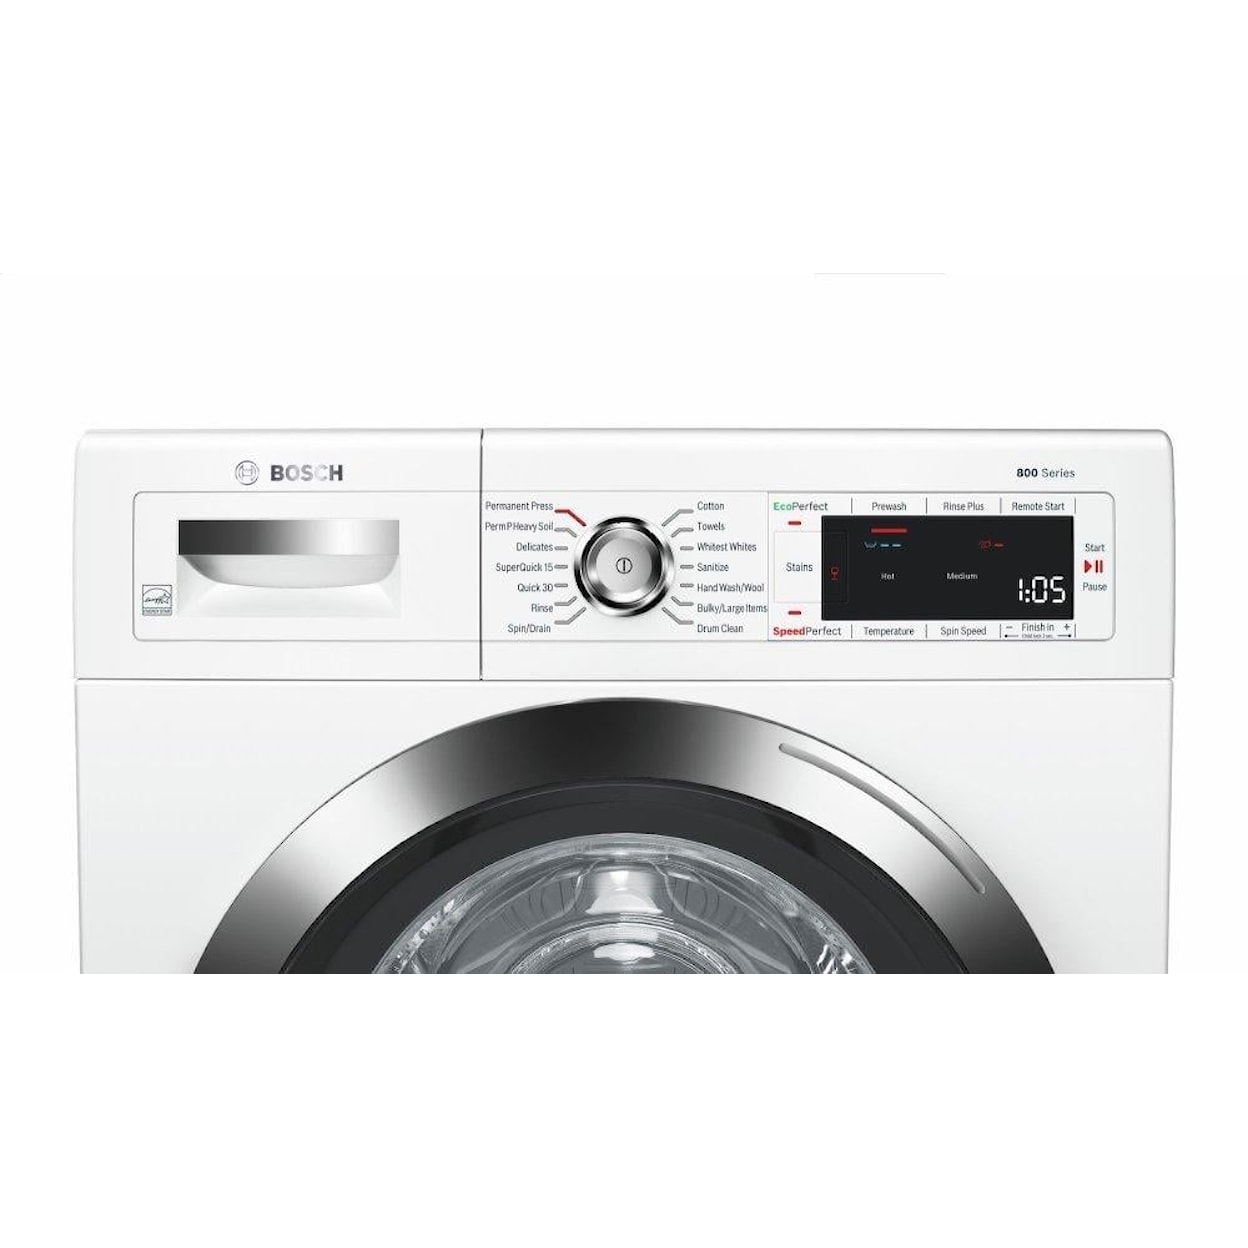 Bosch Laundry Washer